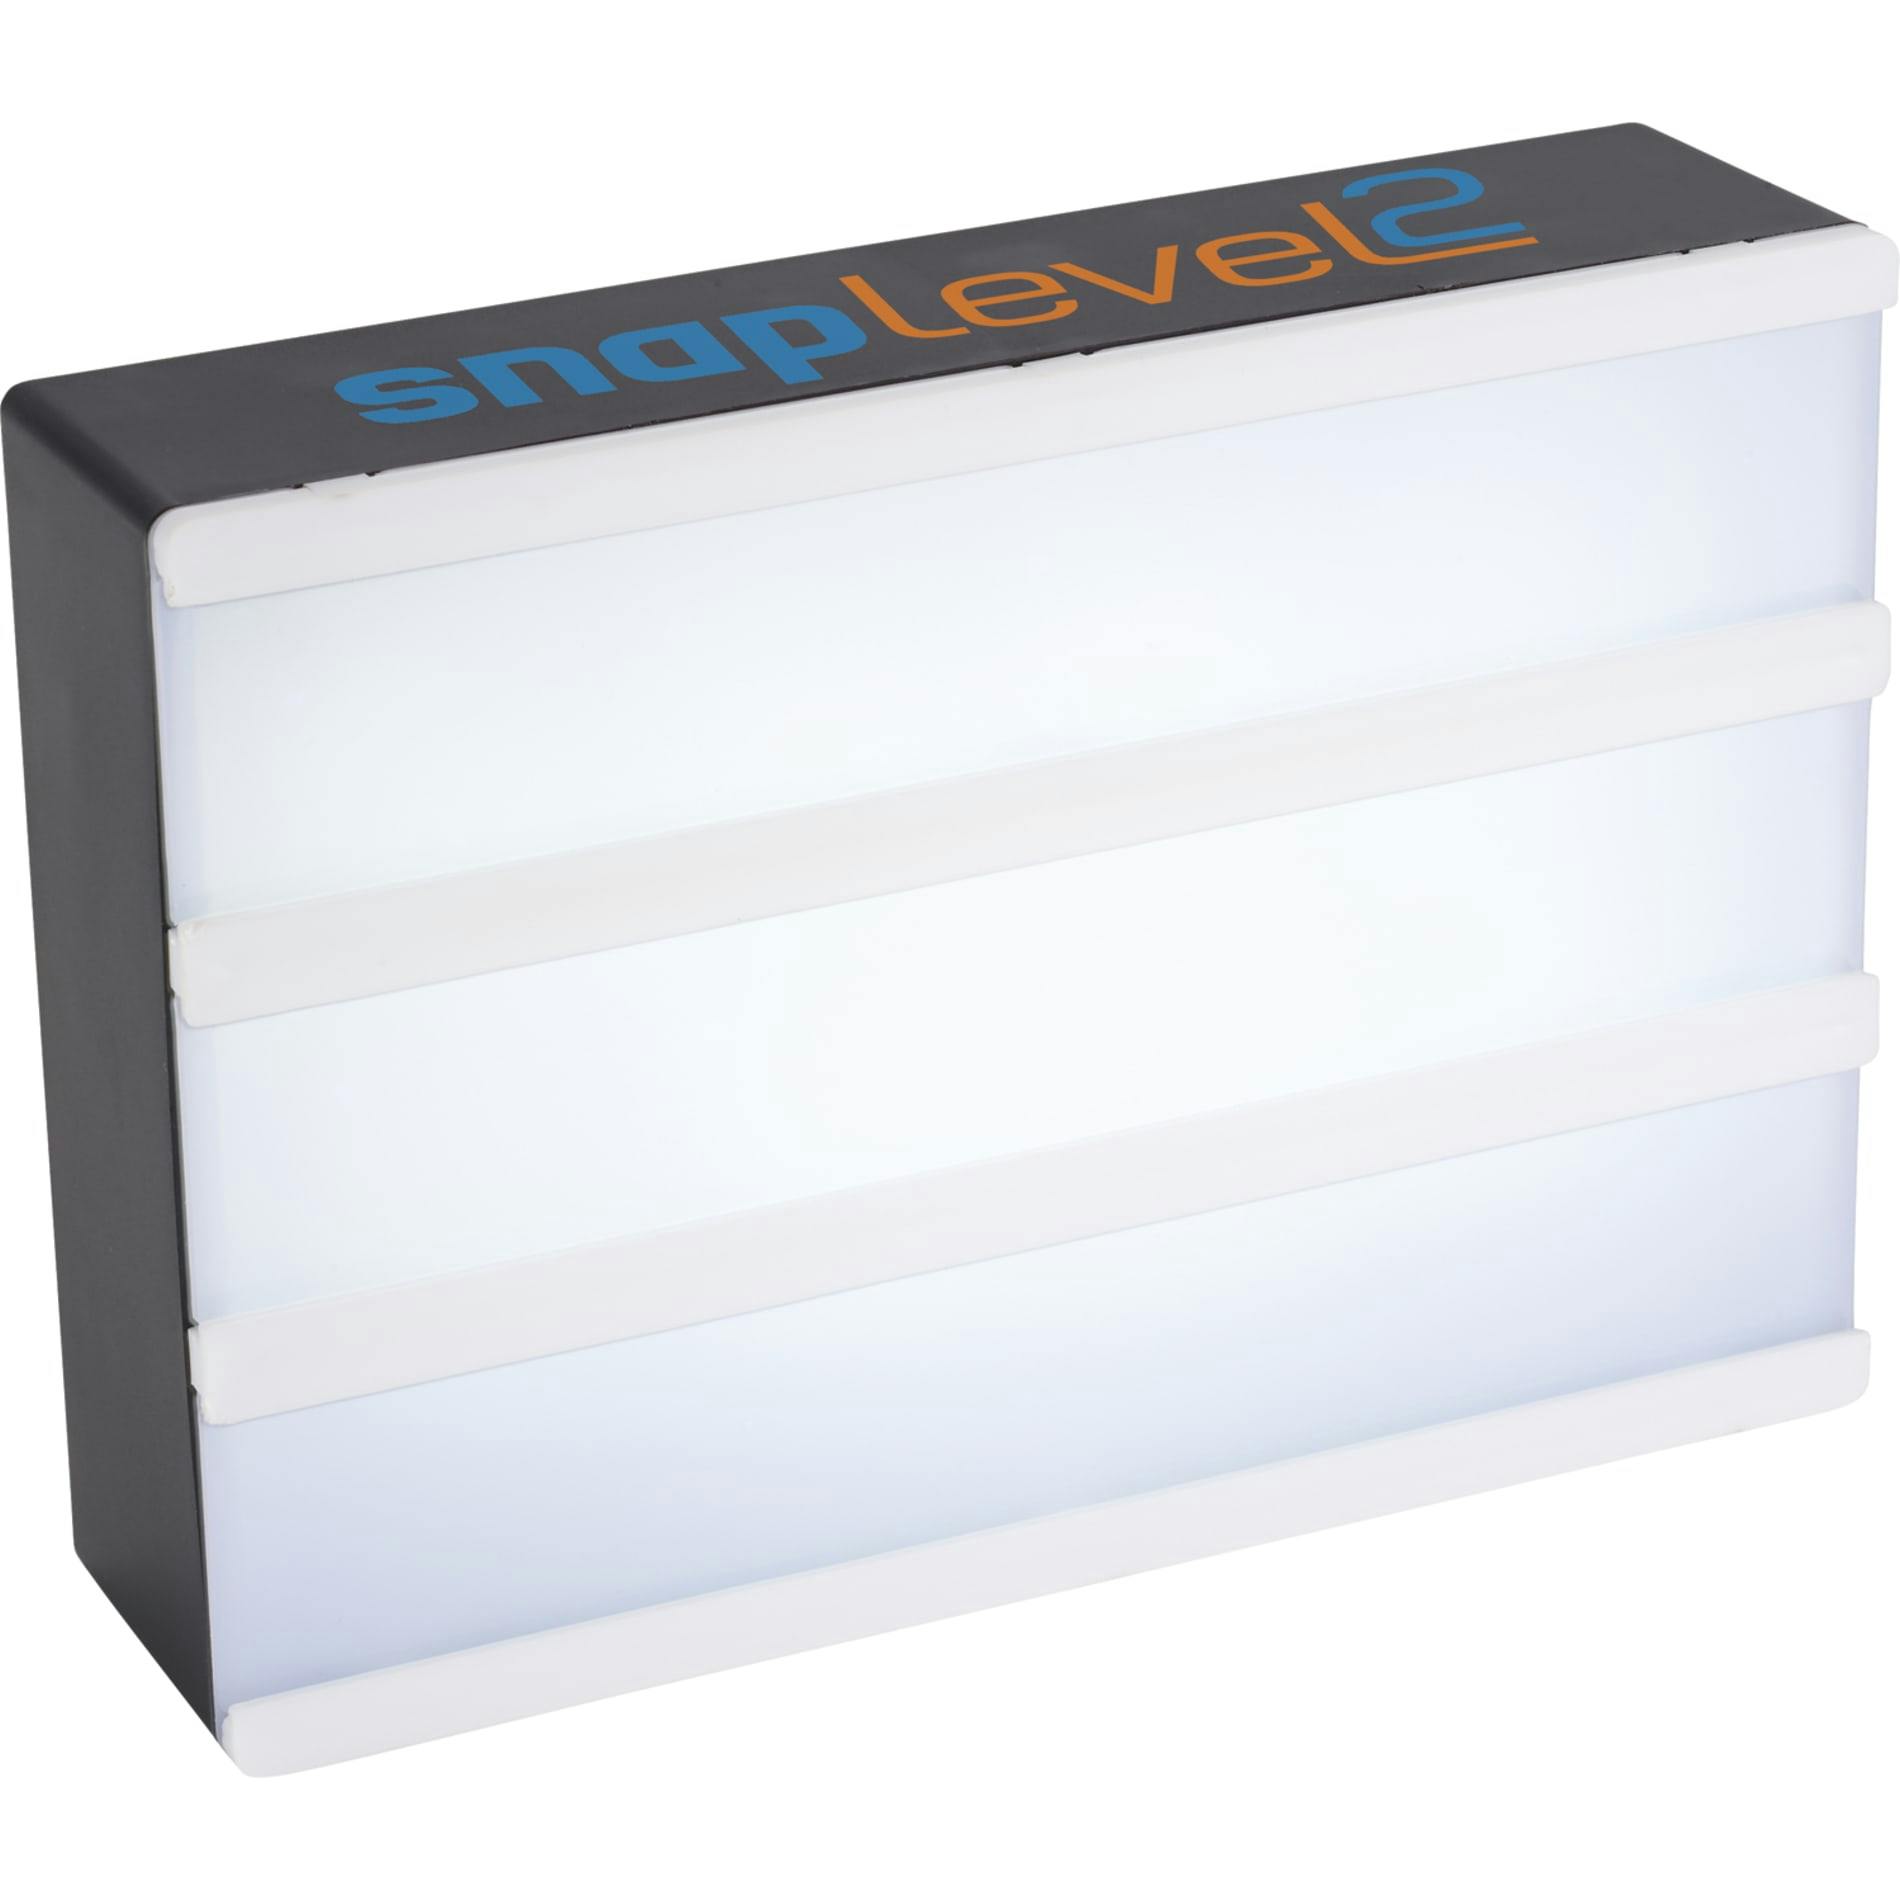 Cinema Light Box - Small - additional Image 6